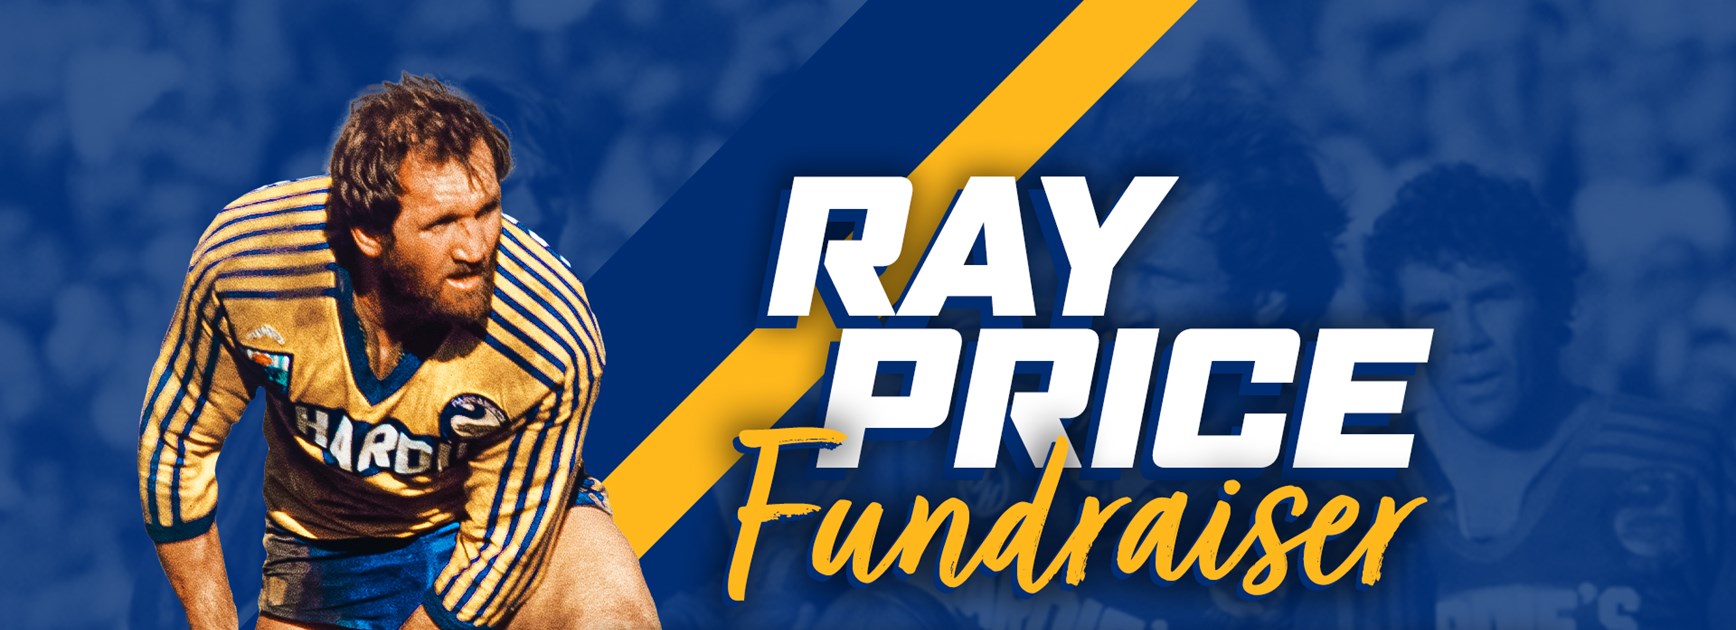 Ray Price Fundraiser